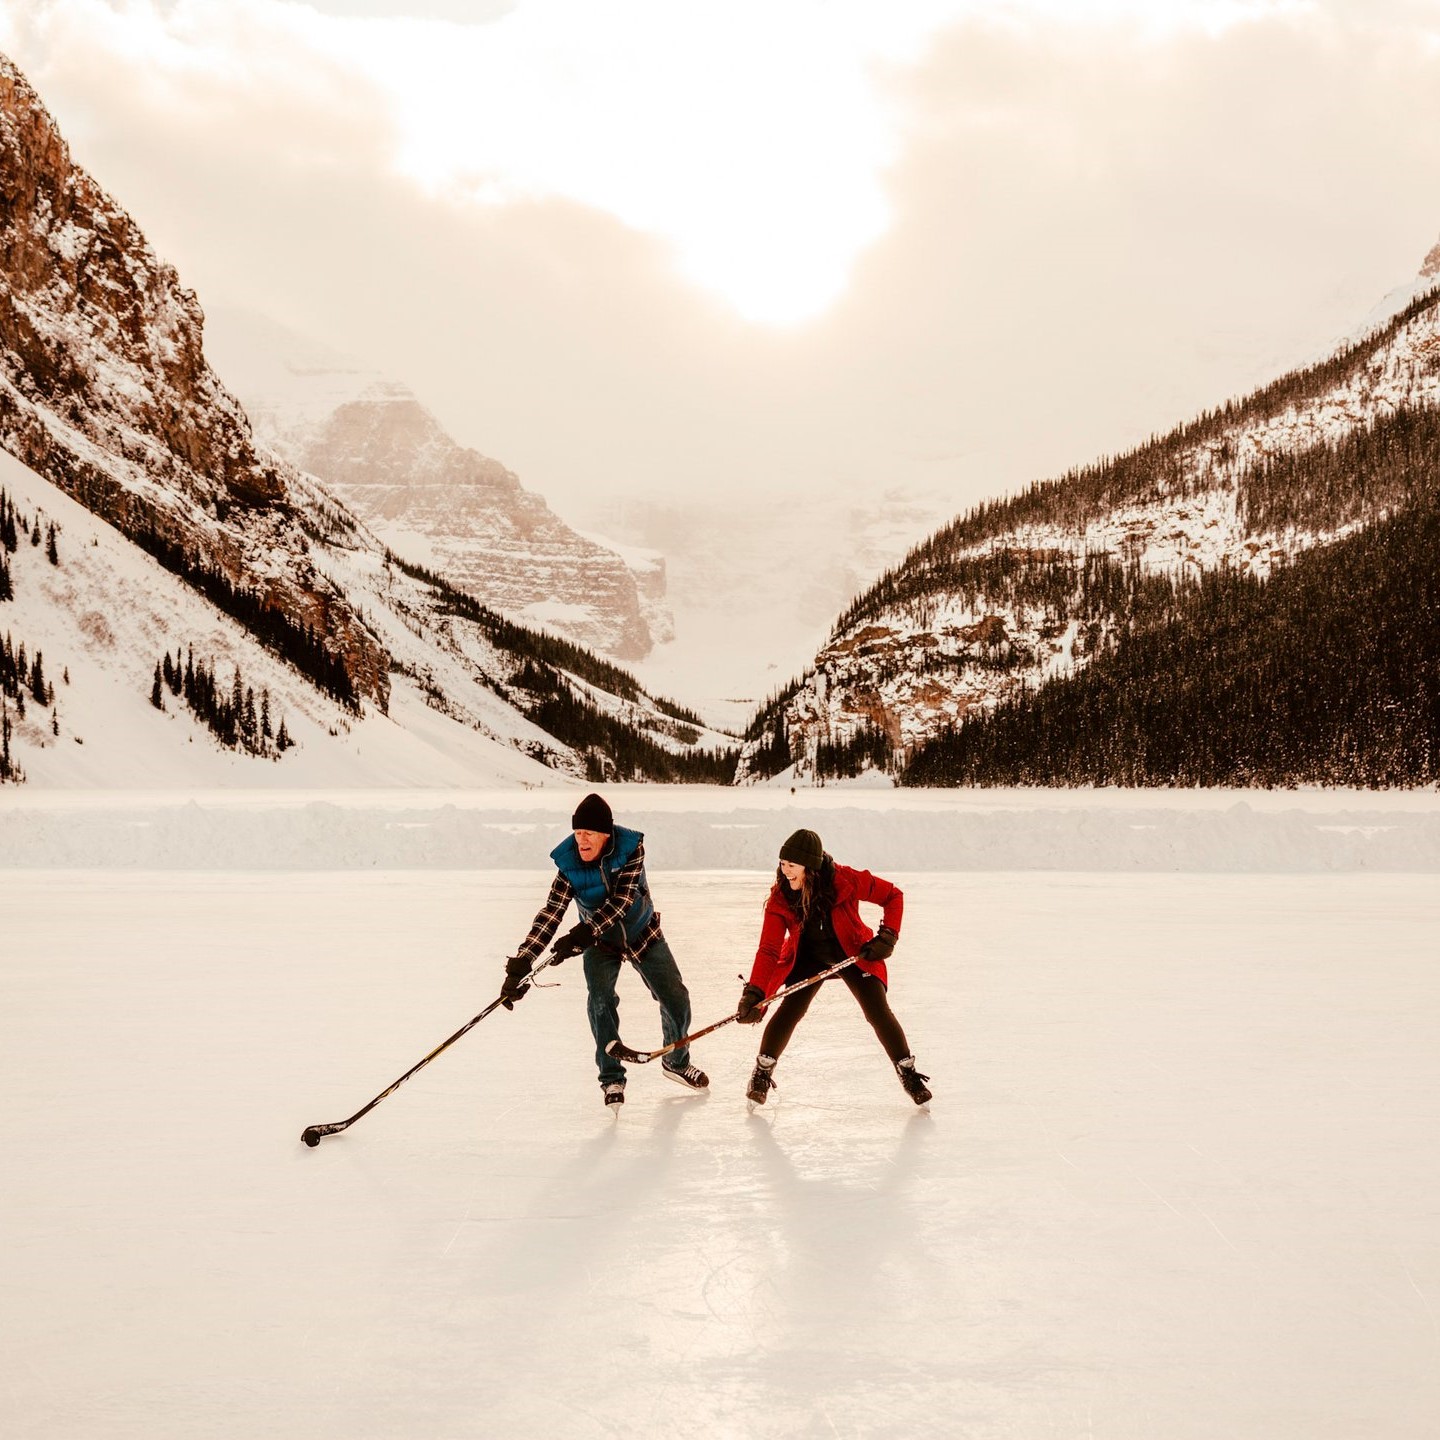 2 people playing hockey on a lake